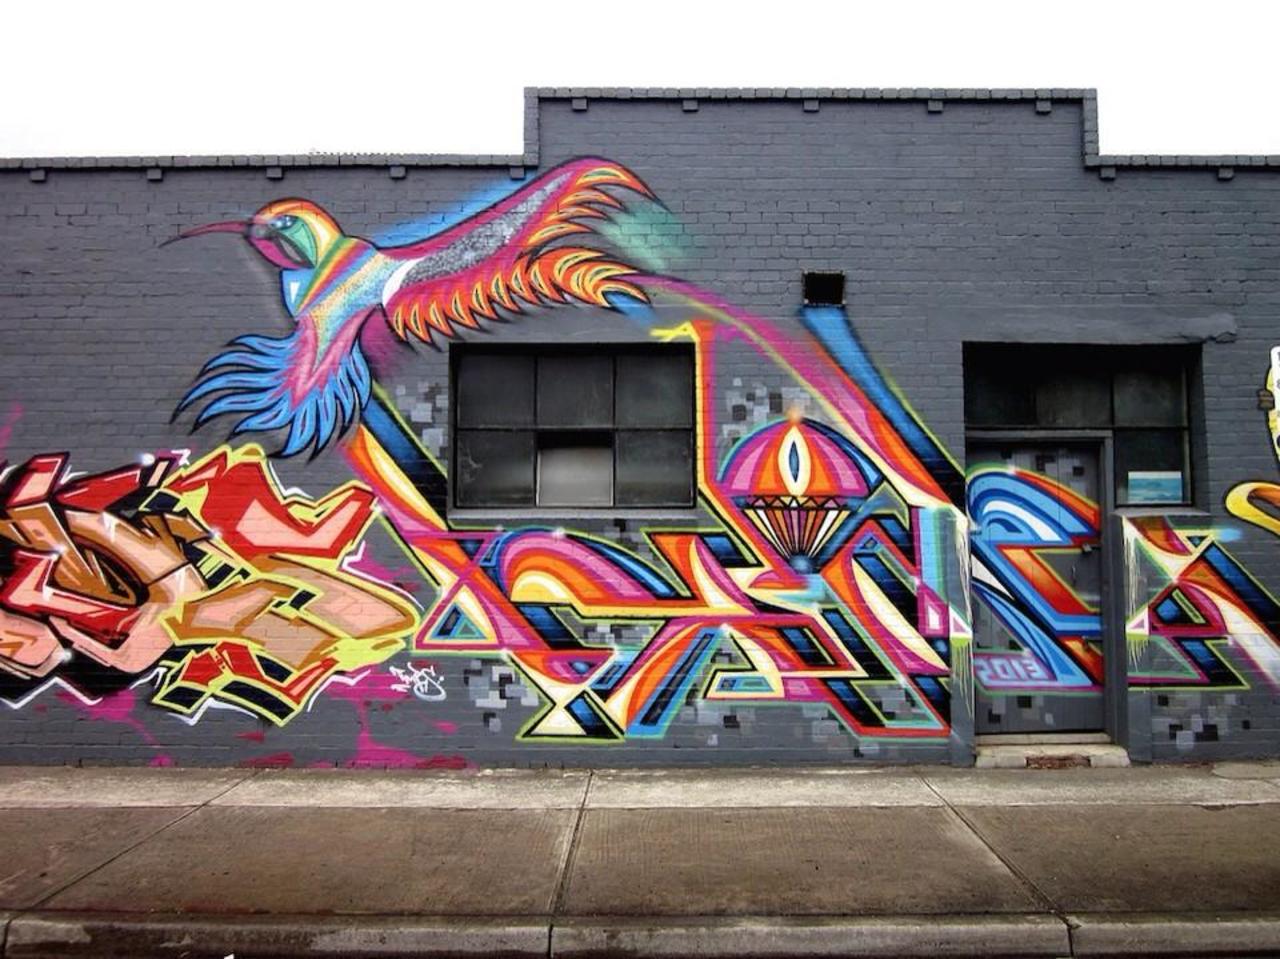 “@Pitchuskita: Bird of rainbow 
Melbourne, Australia

#streetart #art #graffiti #mural http://t.co/qrgV87gbh5”